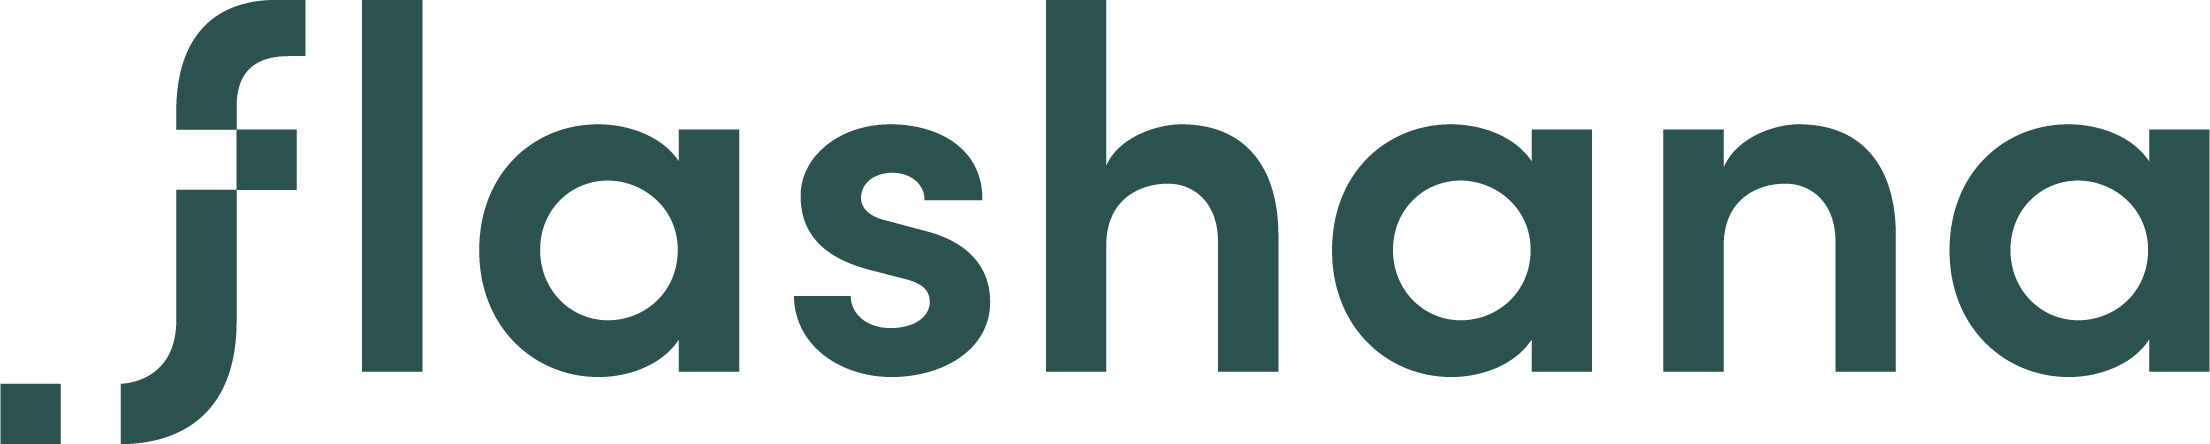 Flashana Technologies logo